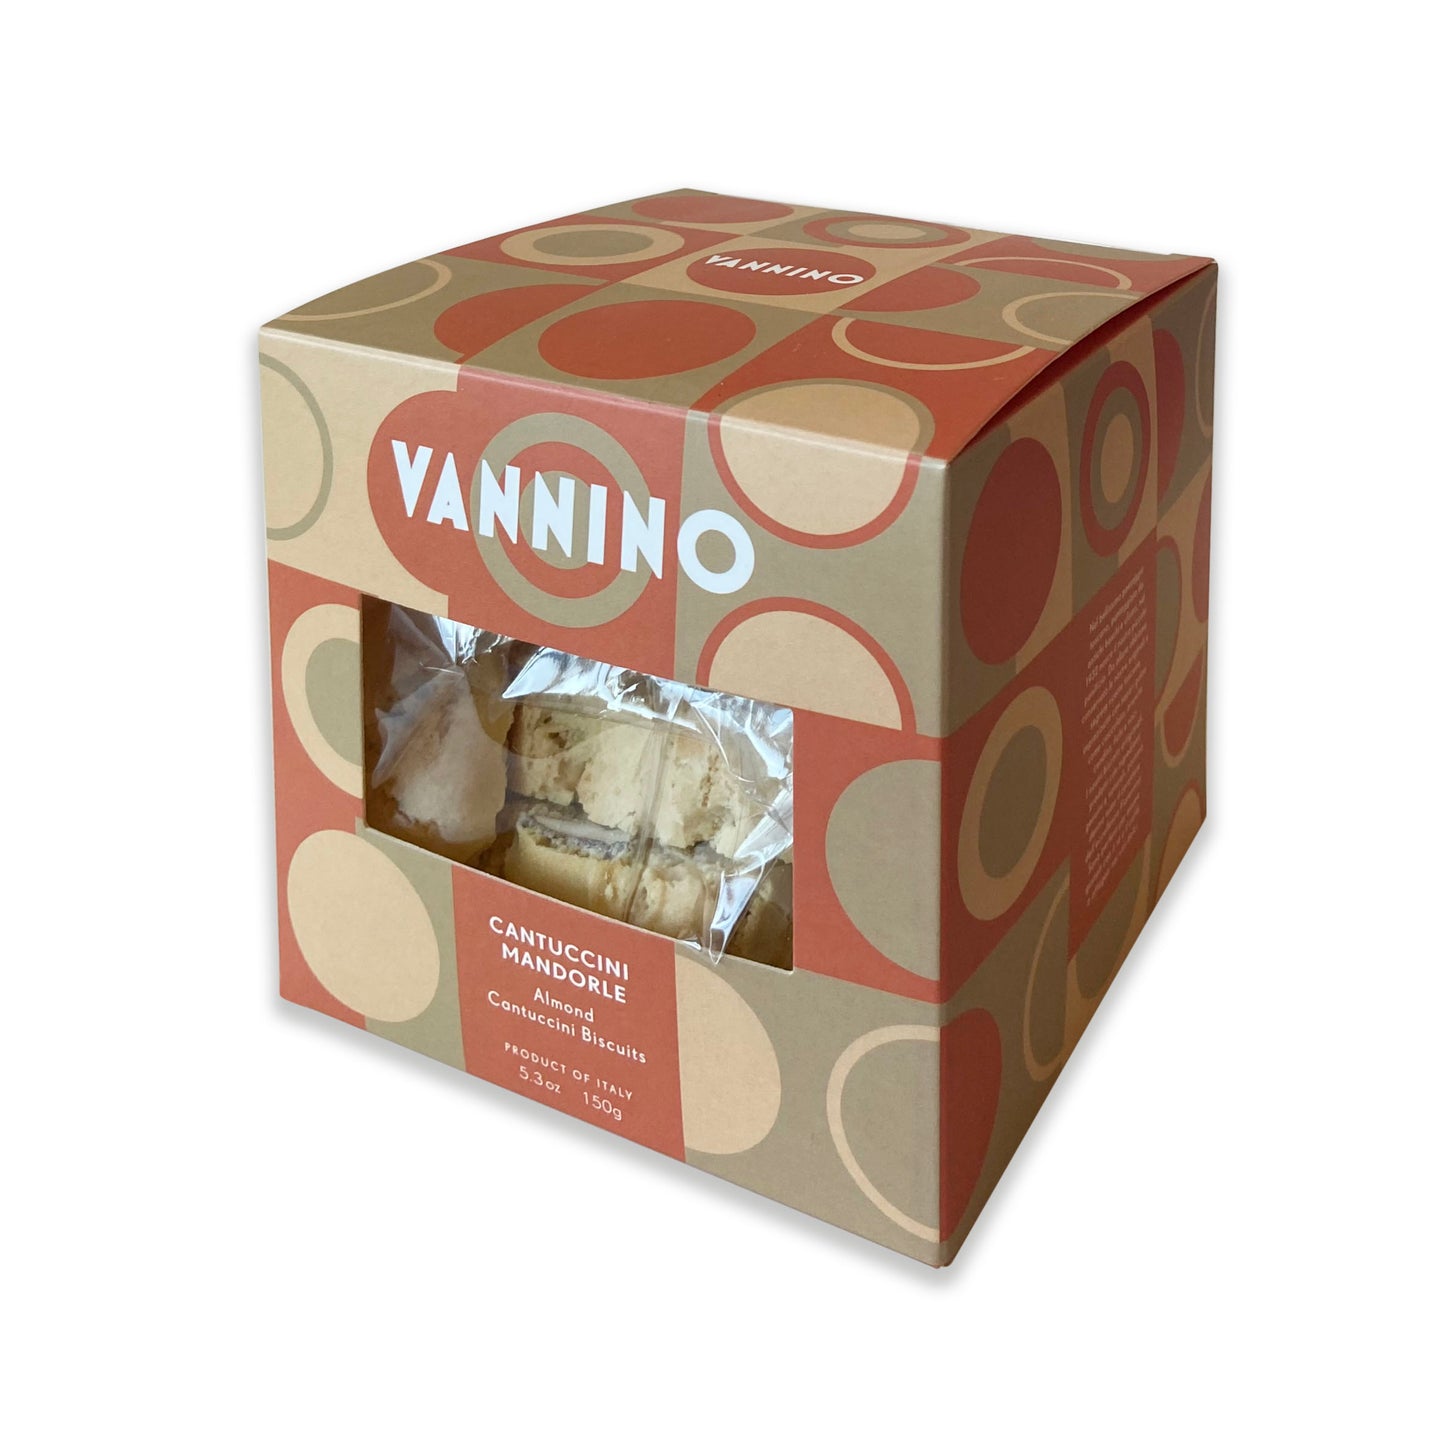 Vannino Almond Cantuccini